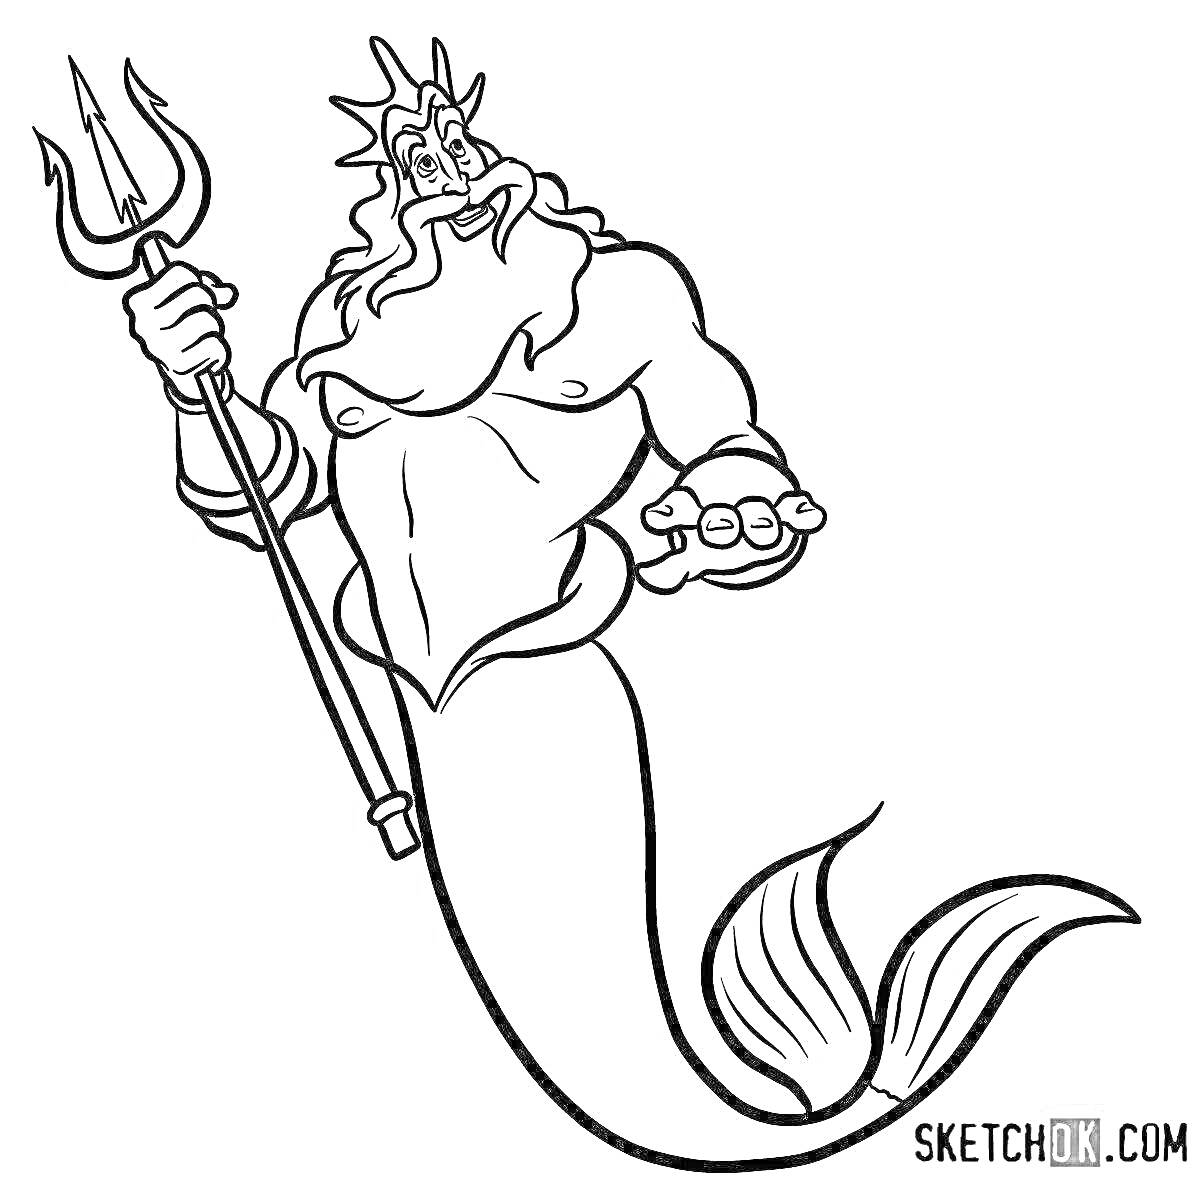 Раскраска Посейдон с трезубцем в руке и хвостом русалки